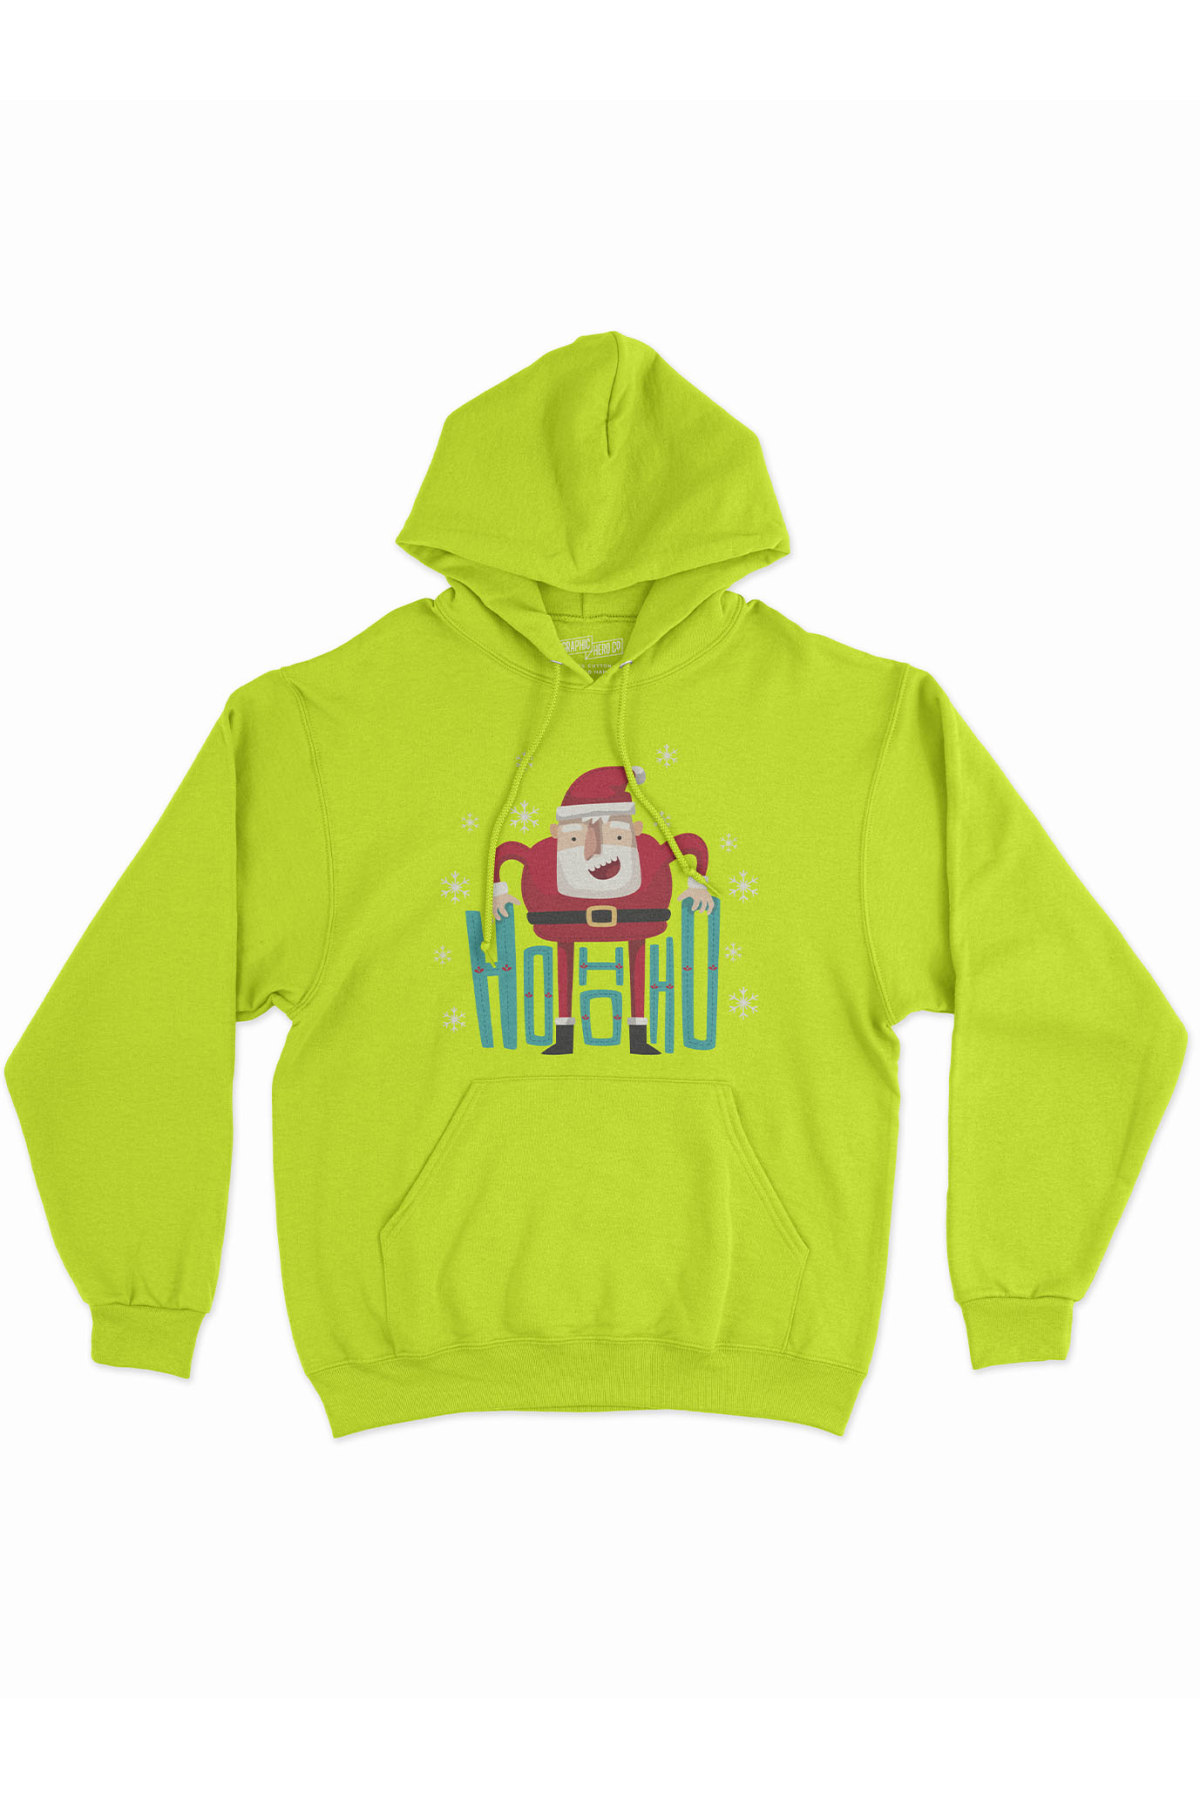 MIJUSTORE Noel Baba Yılbaşı Christmas Temalı 3 İplik Kalın Sweatshirt Hoodie